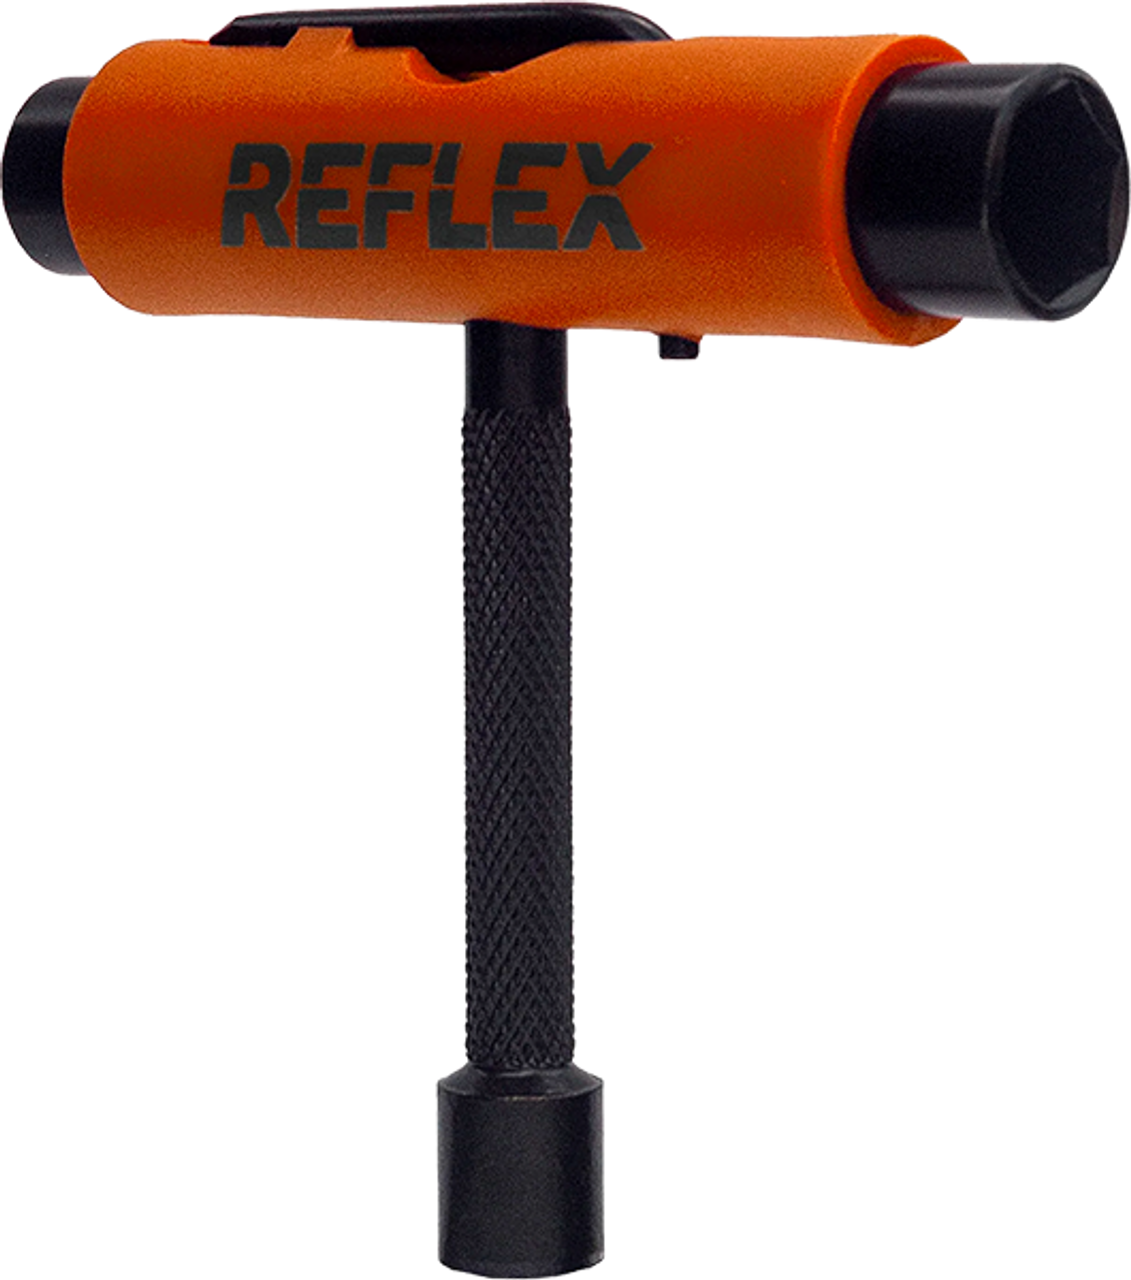 Reflex Skate Tool